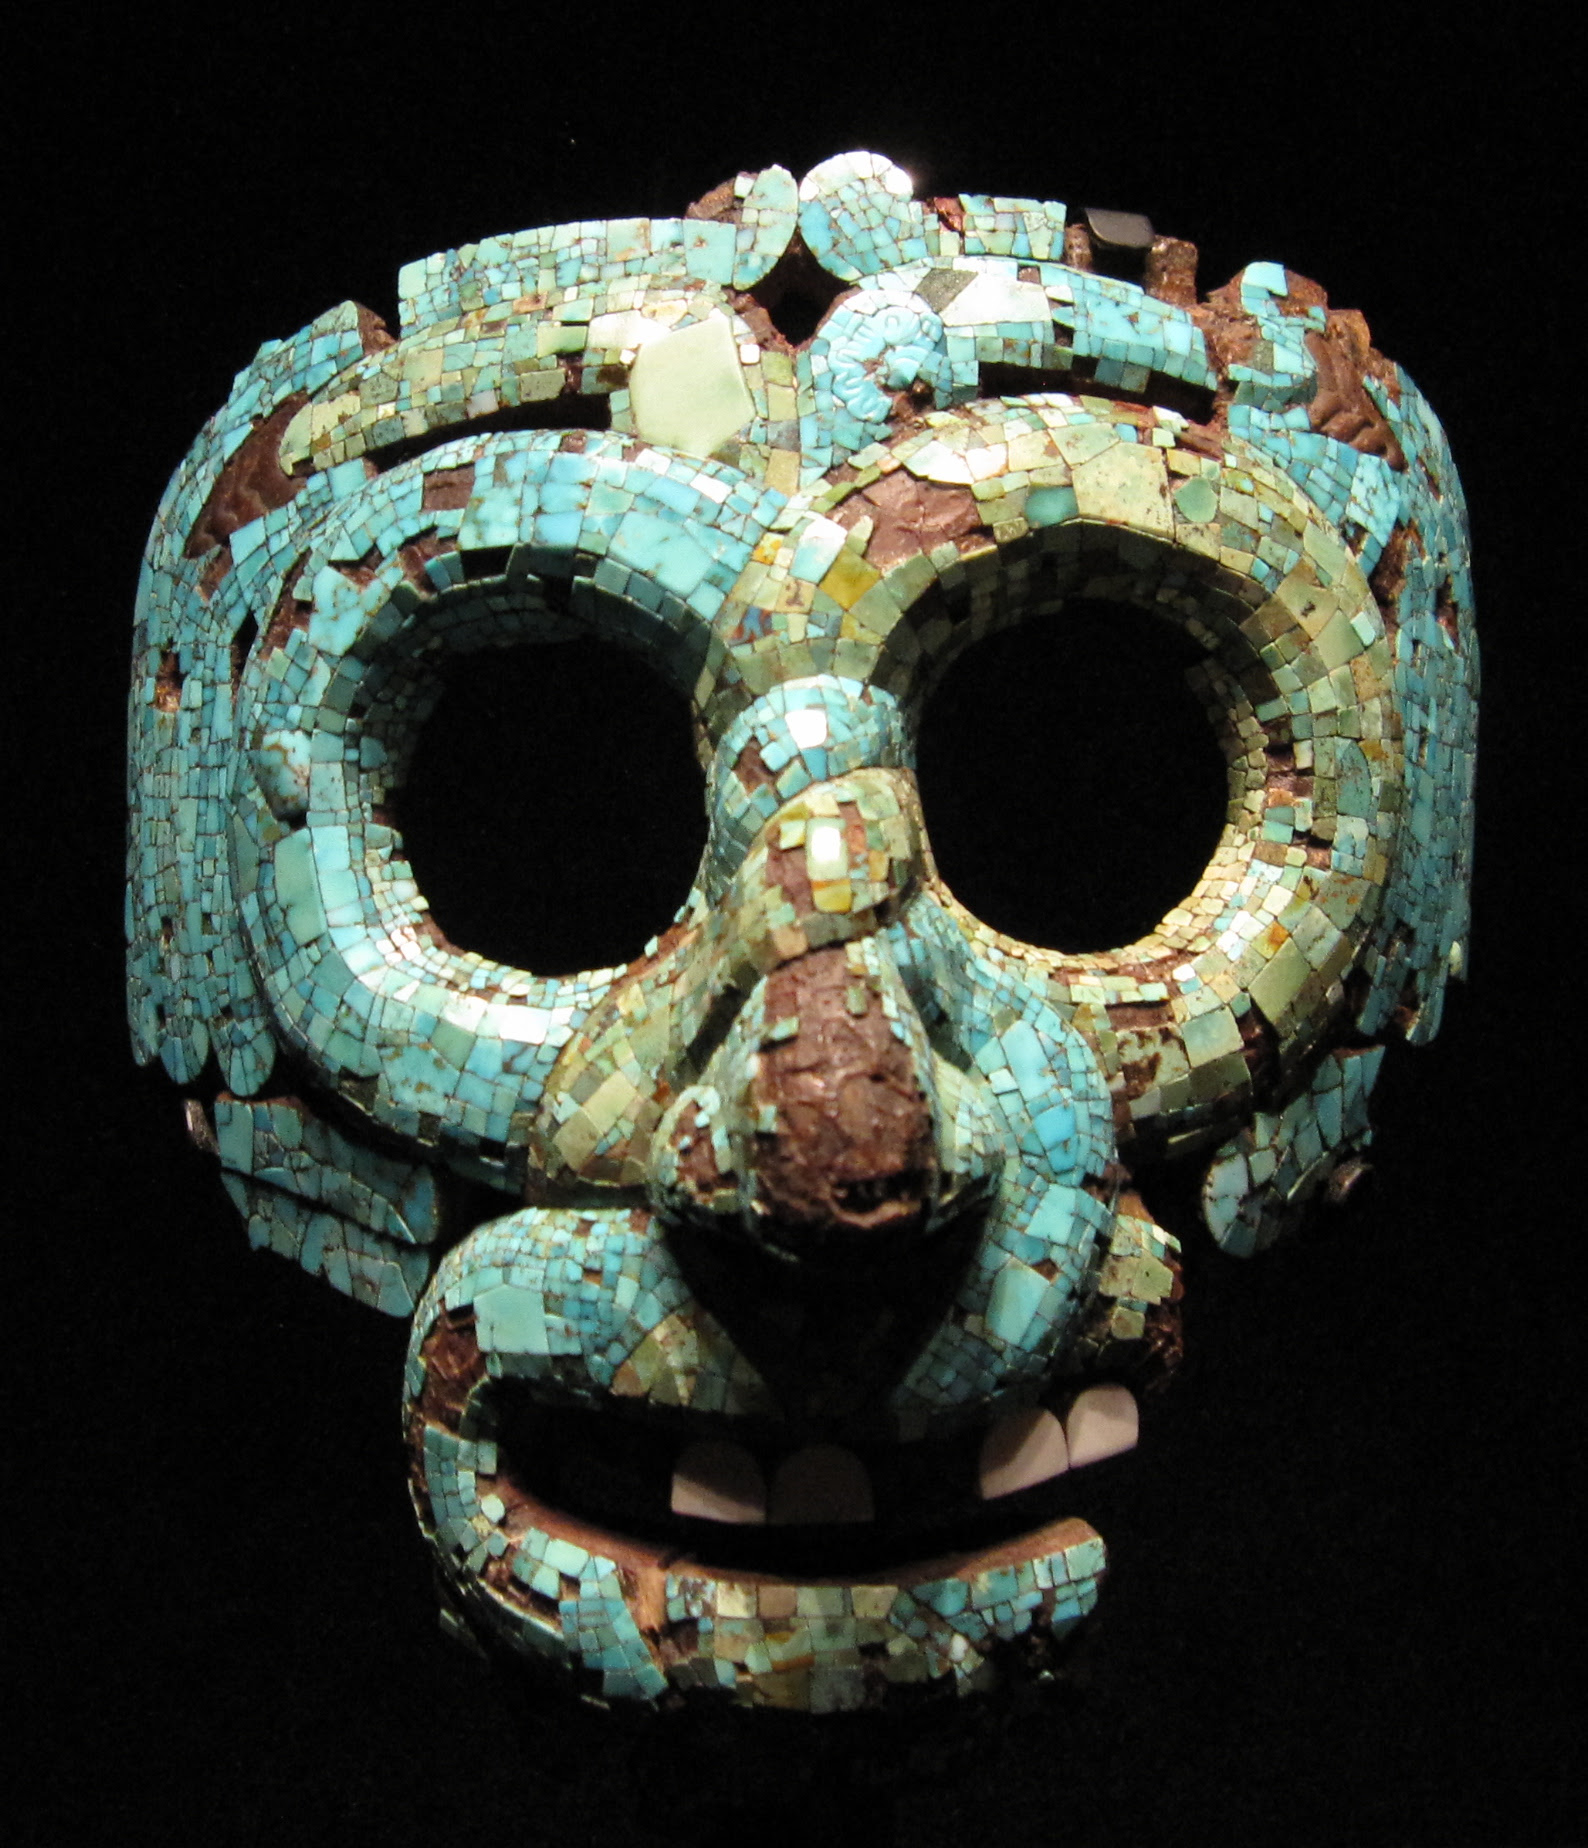 http://upload.wikimedia.org/wikipedia/commons/f/f6/British_Museum_Mixtec.jpg